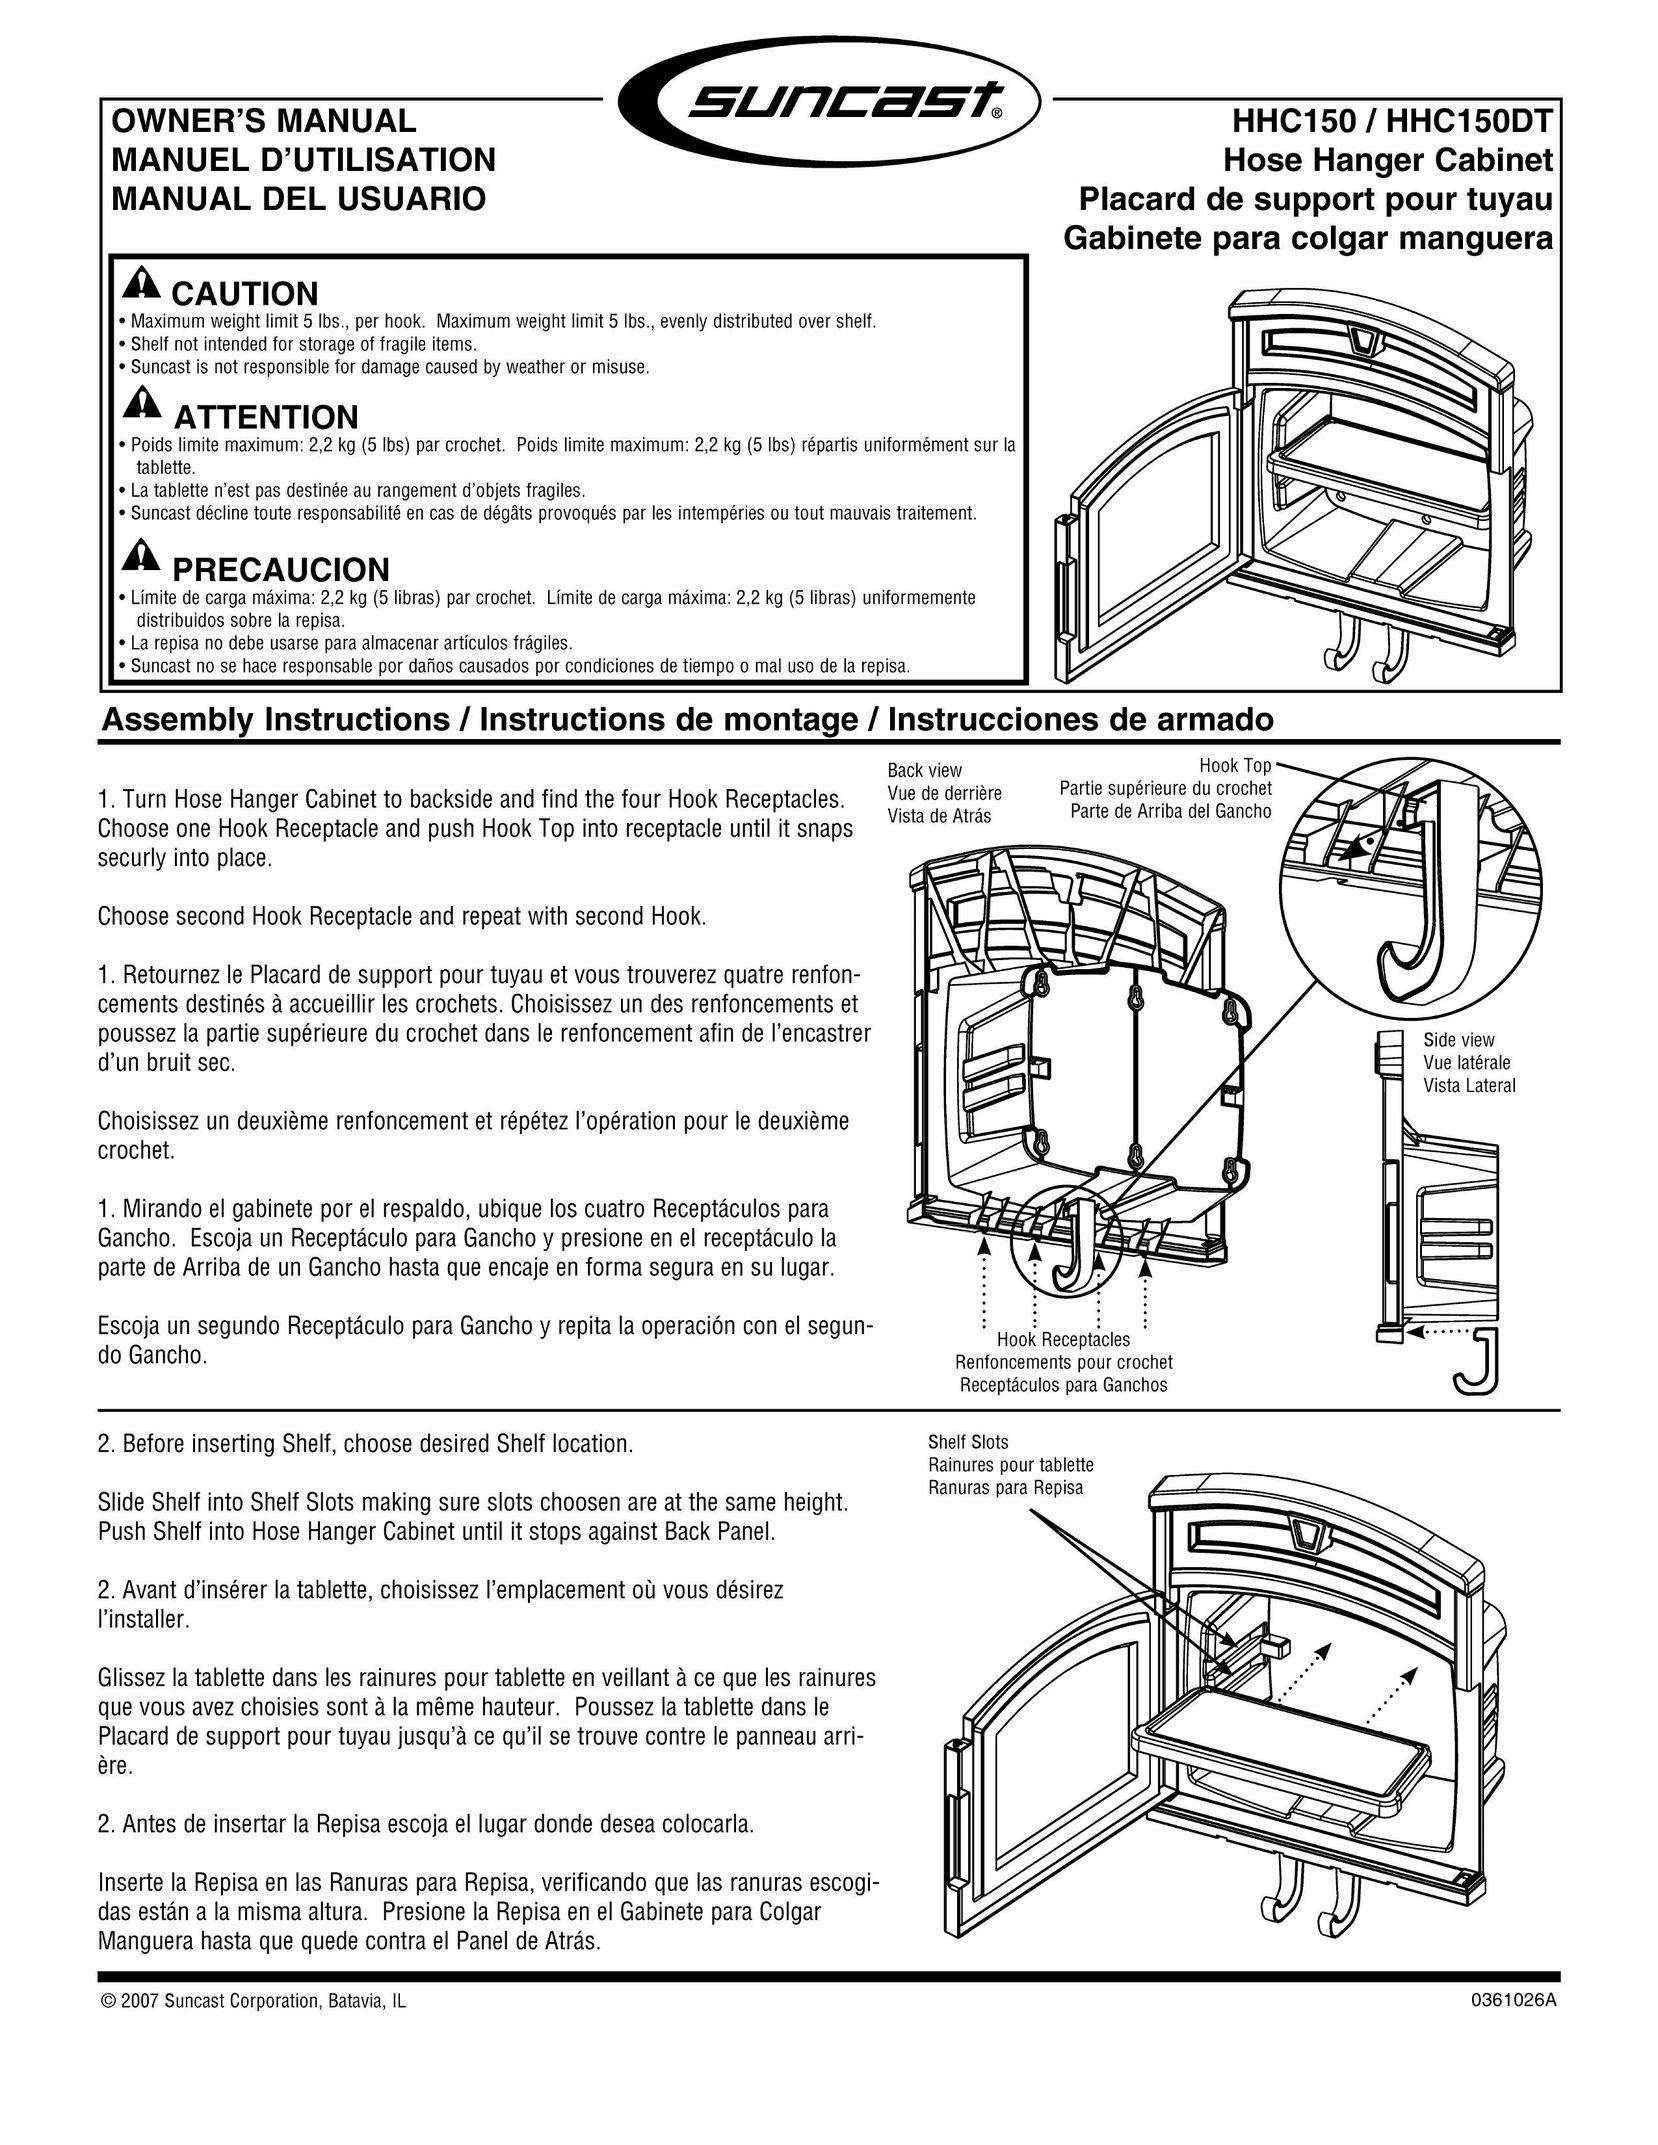 Suncast HHC150DT Tool Storage User Manual